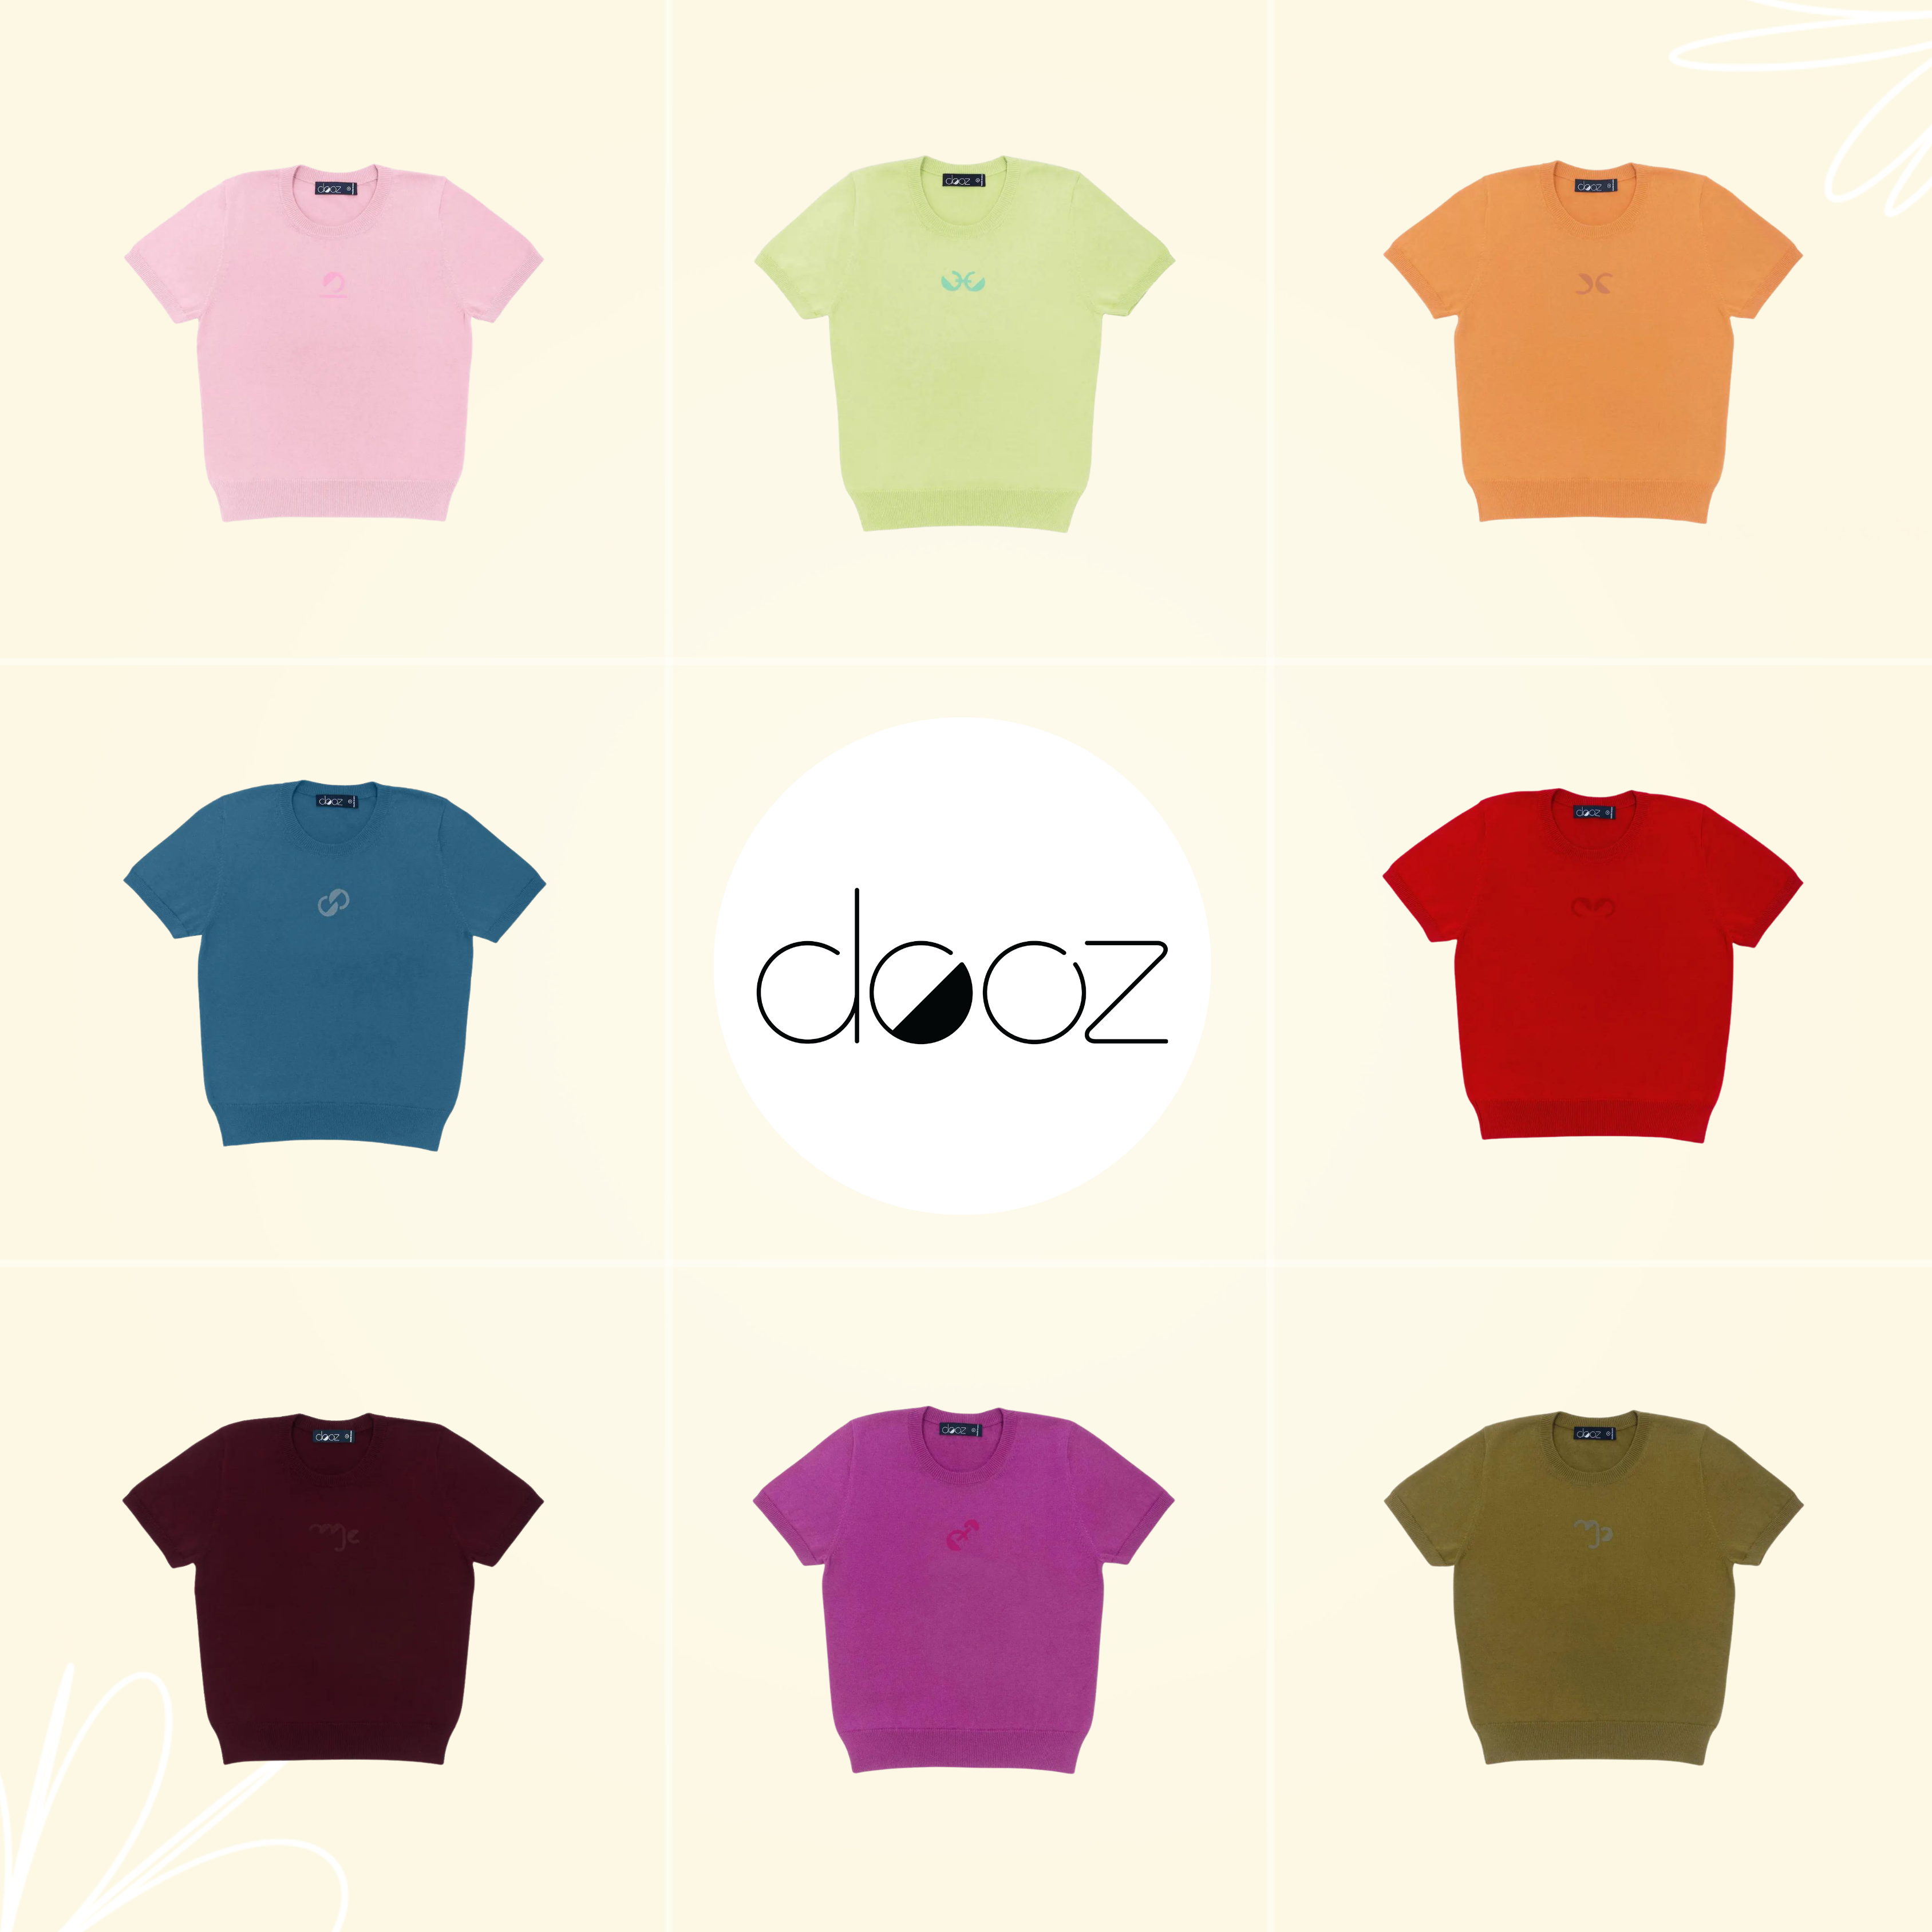 Brand image for Dooz